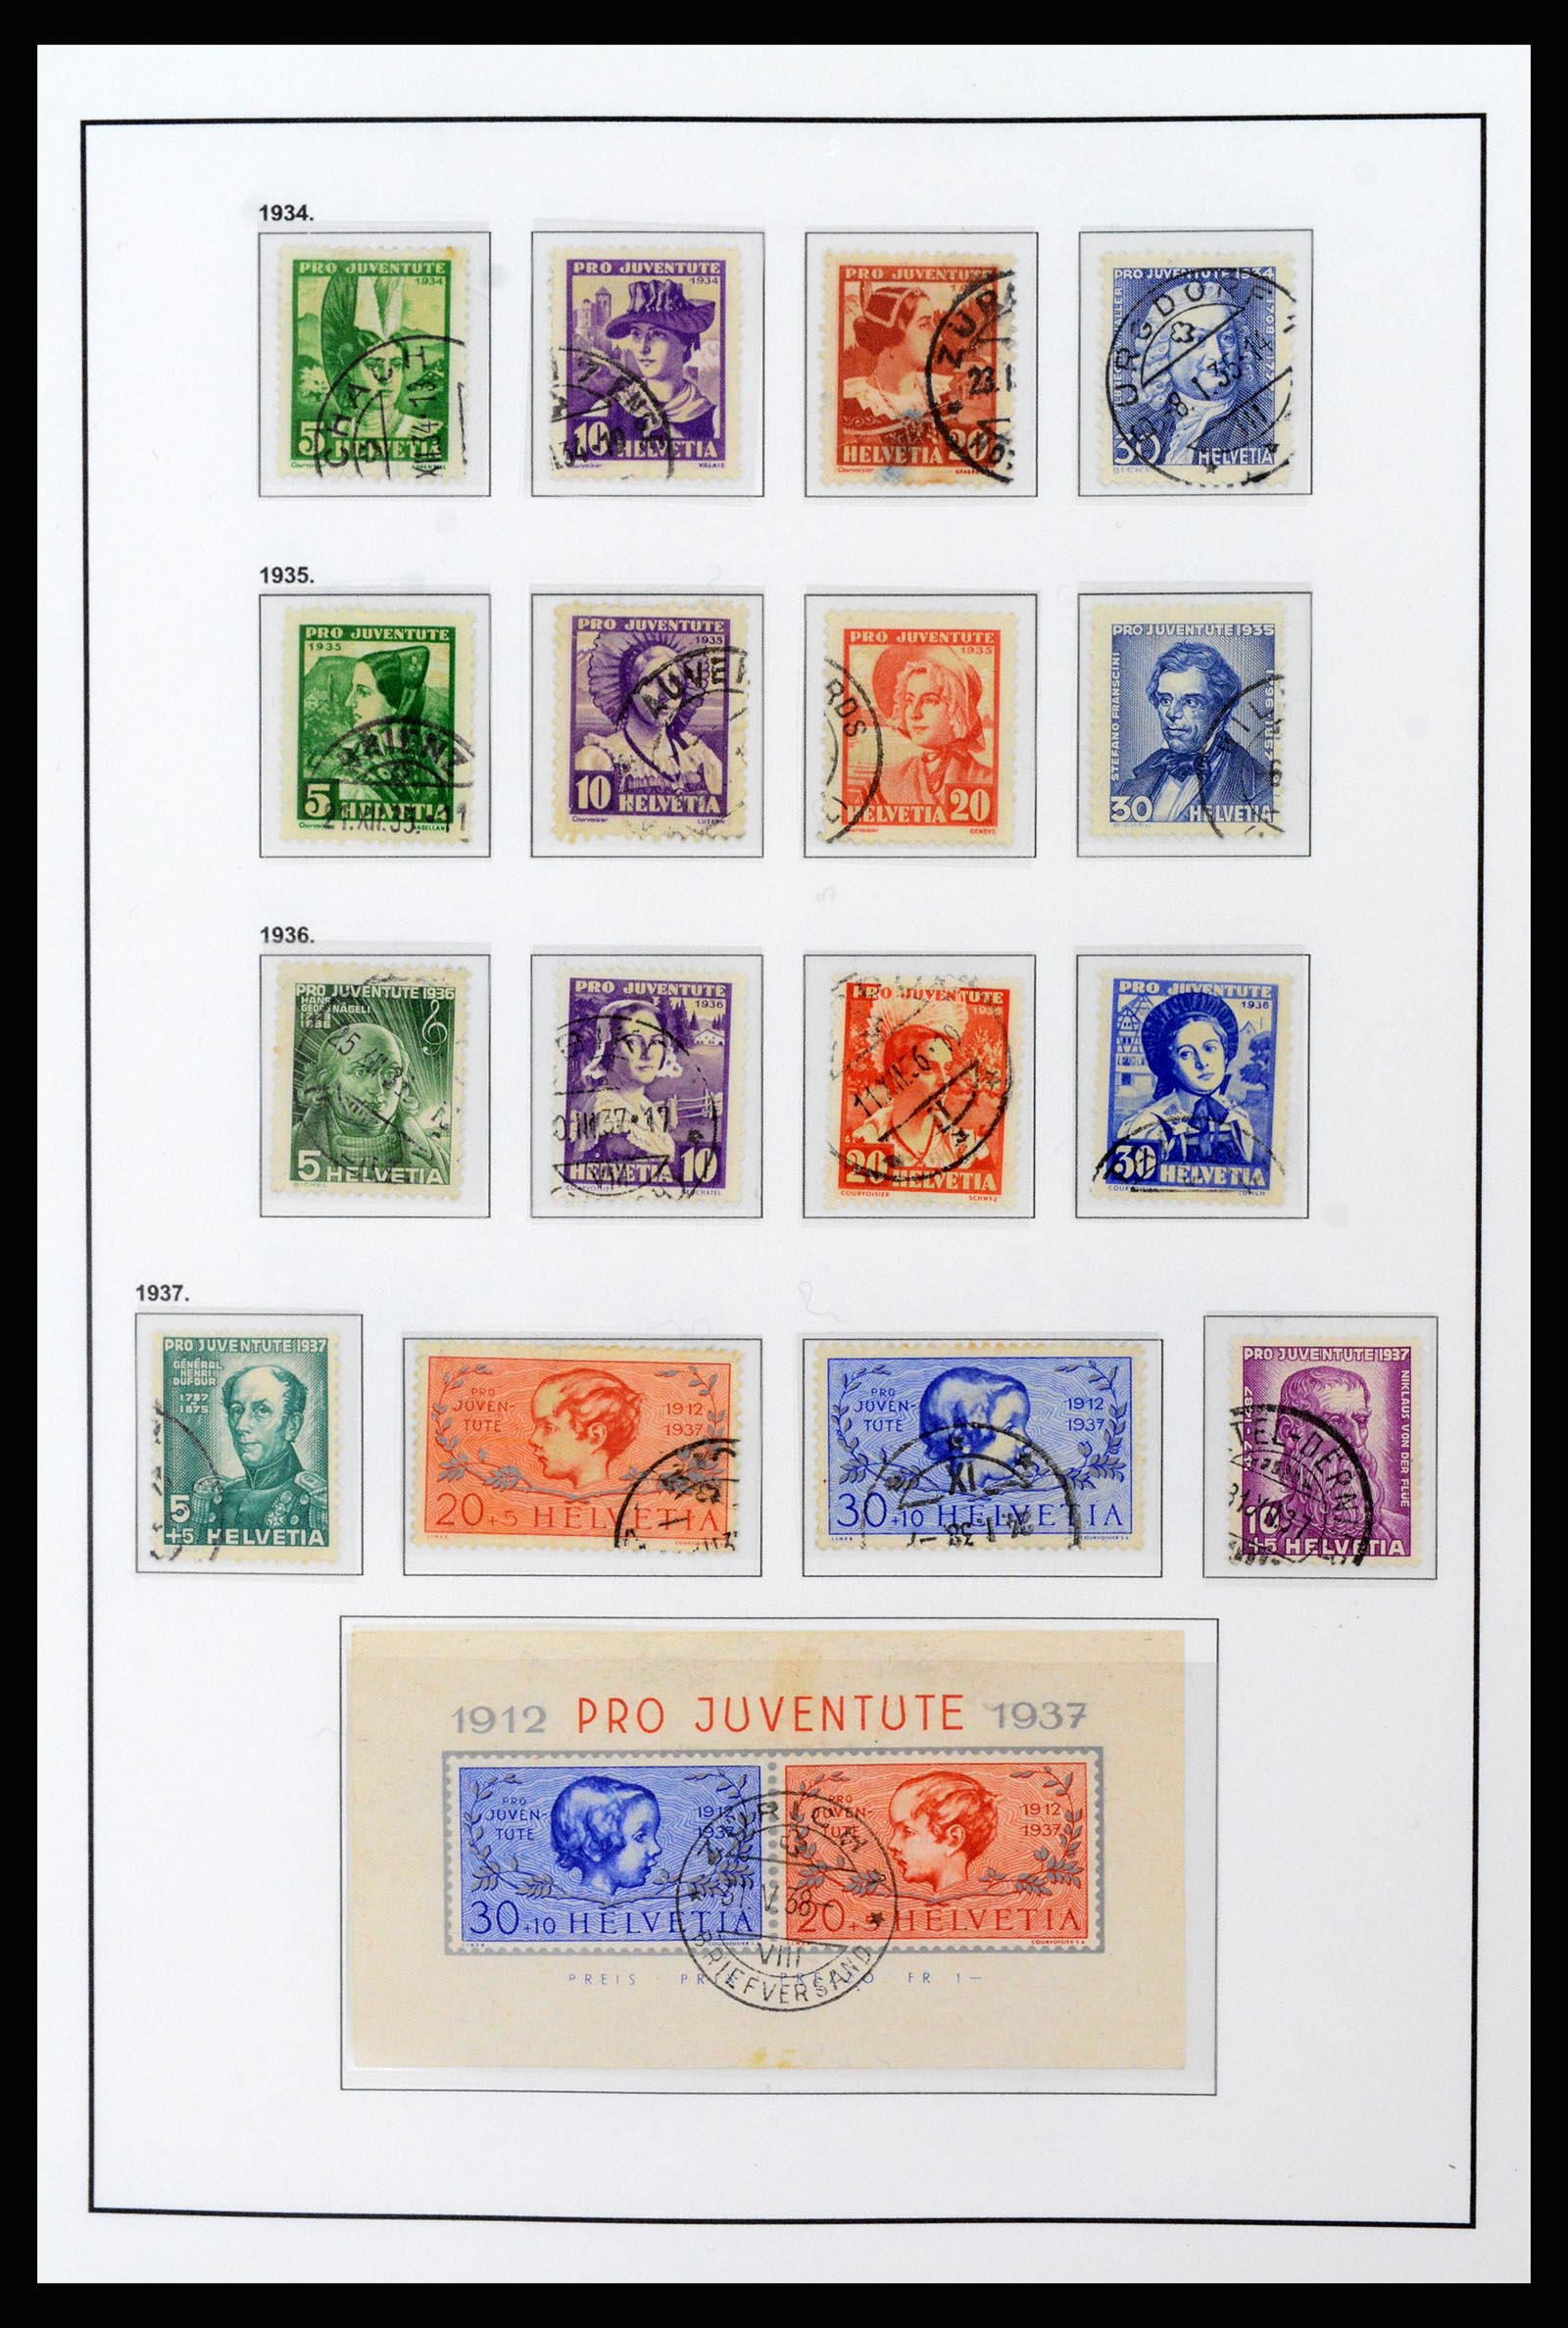 37225 059 - Stamp collection 37225 Switzerland 1854-2020.